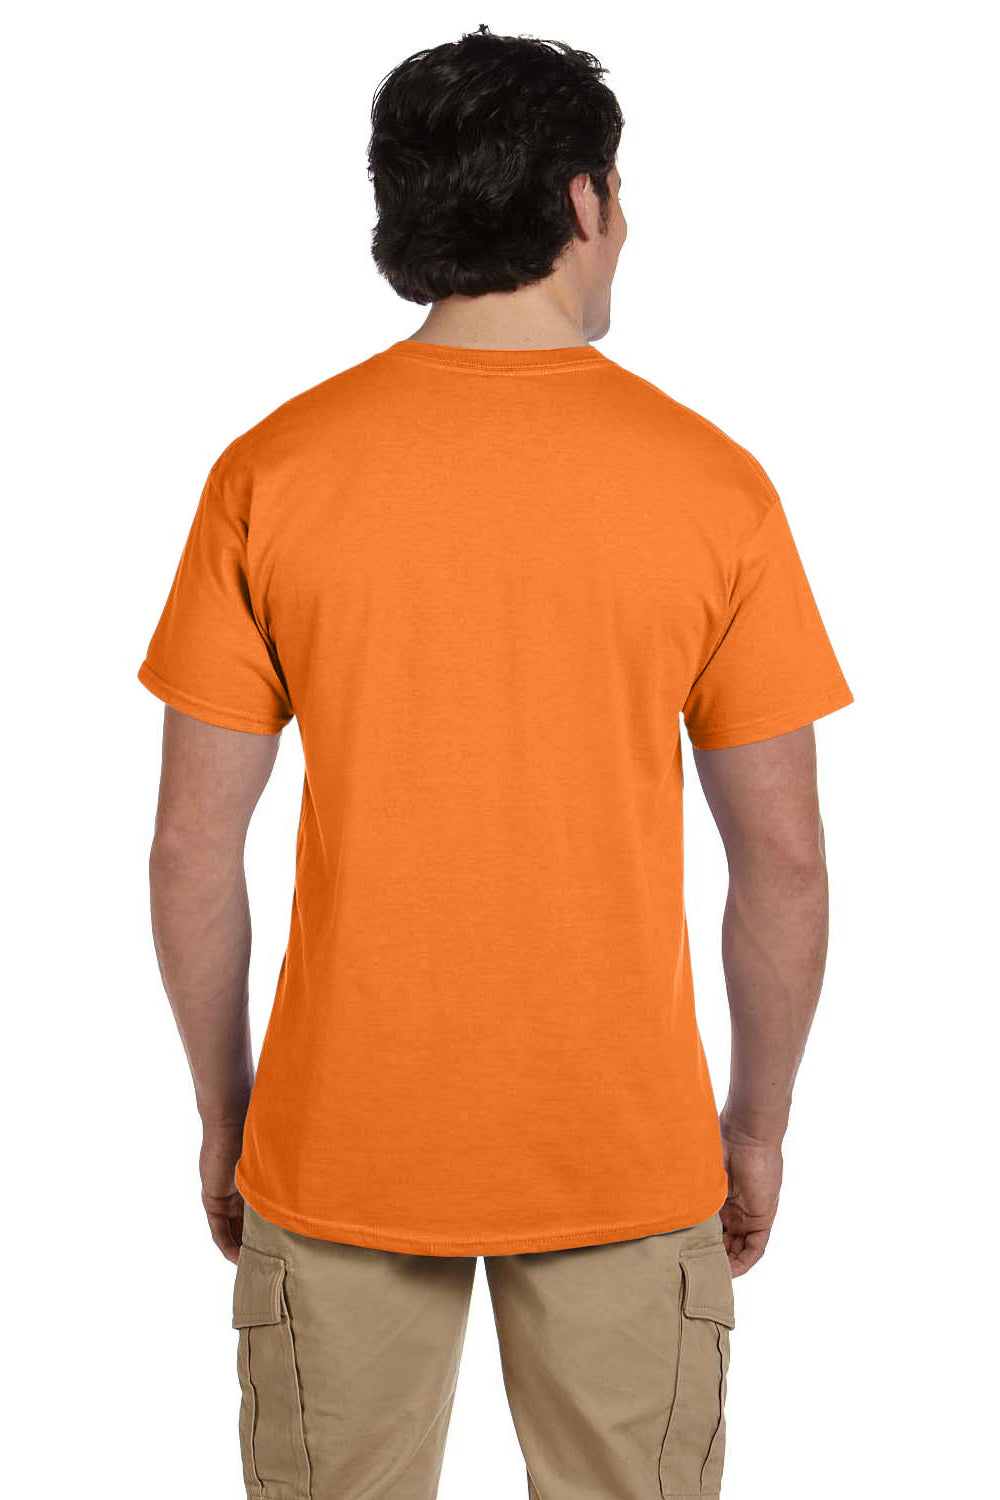 Hanes 5170 Mens EcoSmart Short Sleeve Crewneck T-Shirt Safety Orange Back